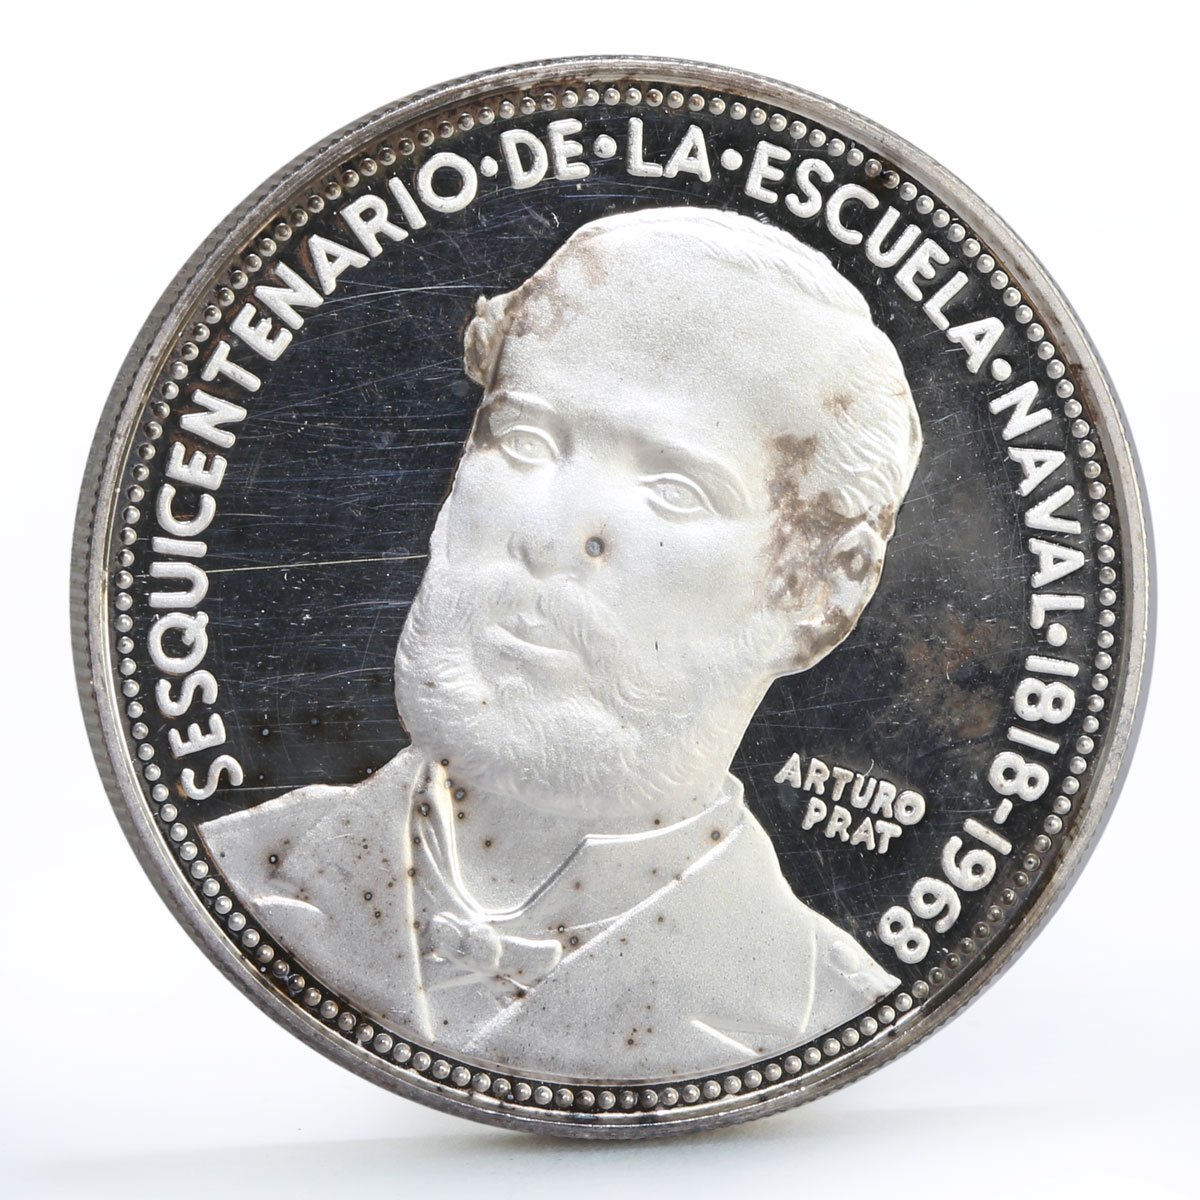 Chile 5 pesos 150 Years of Naval Academy Arturo Prat silver coin 1968